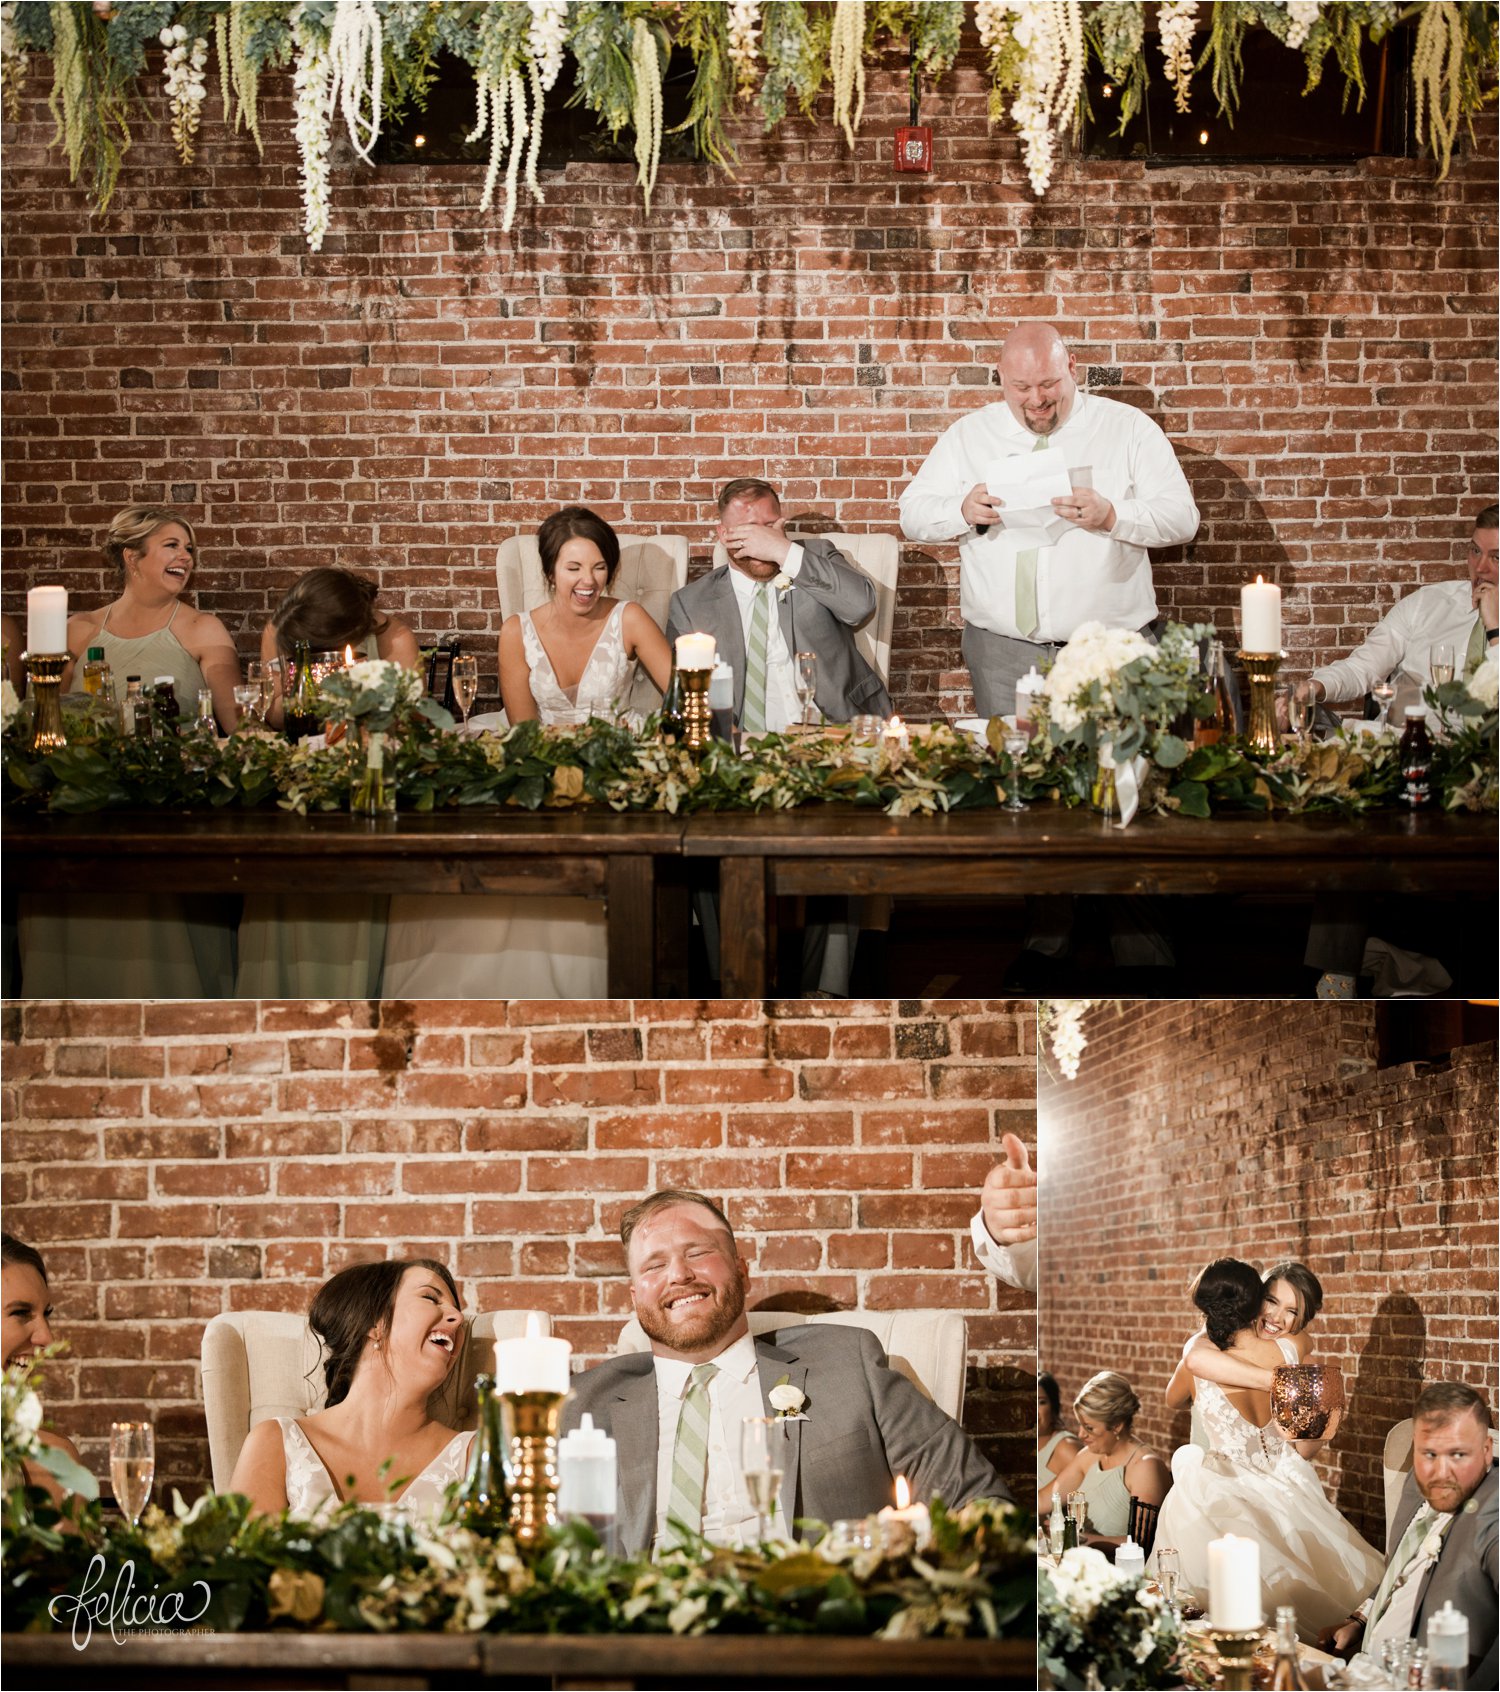 images by feliciathephotographer.com | magnolia venue | urban garden wedding | photographer | kansas city missouri | reception | hanging flowers | botanical | laughter | best man | maid of honor | champagne toast | 